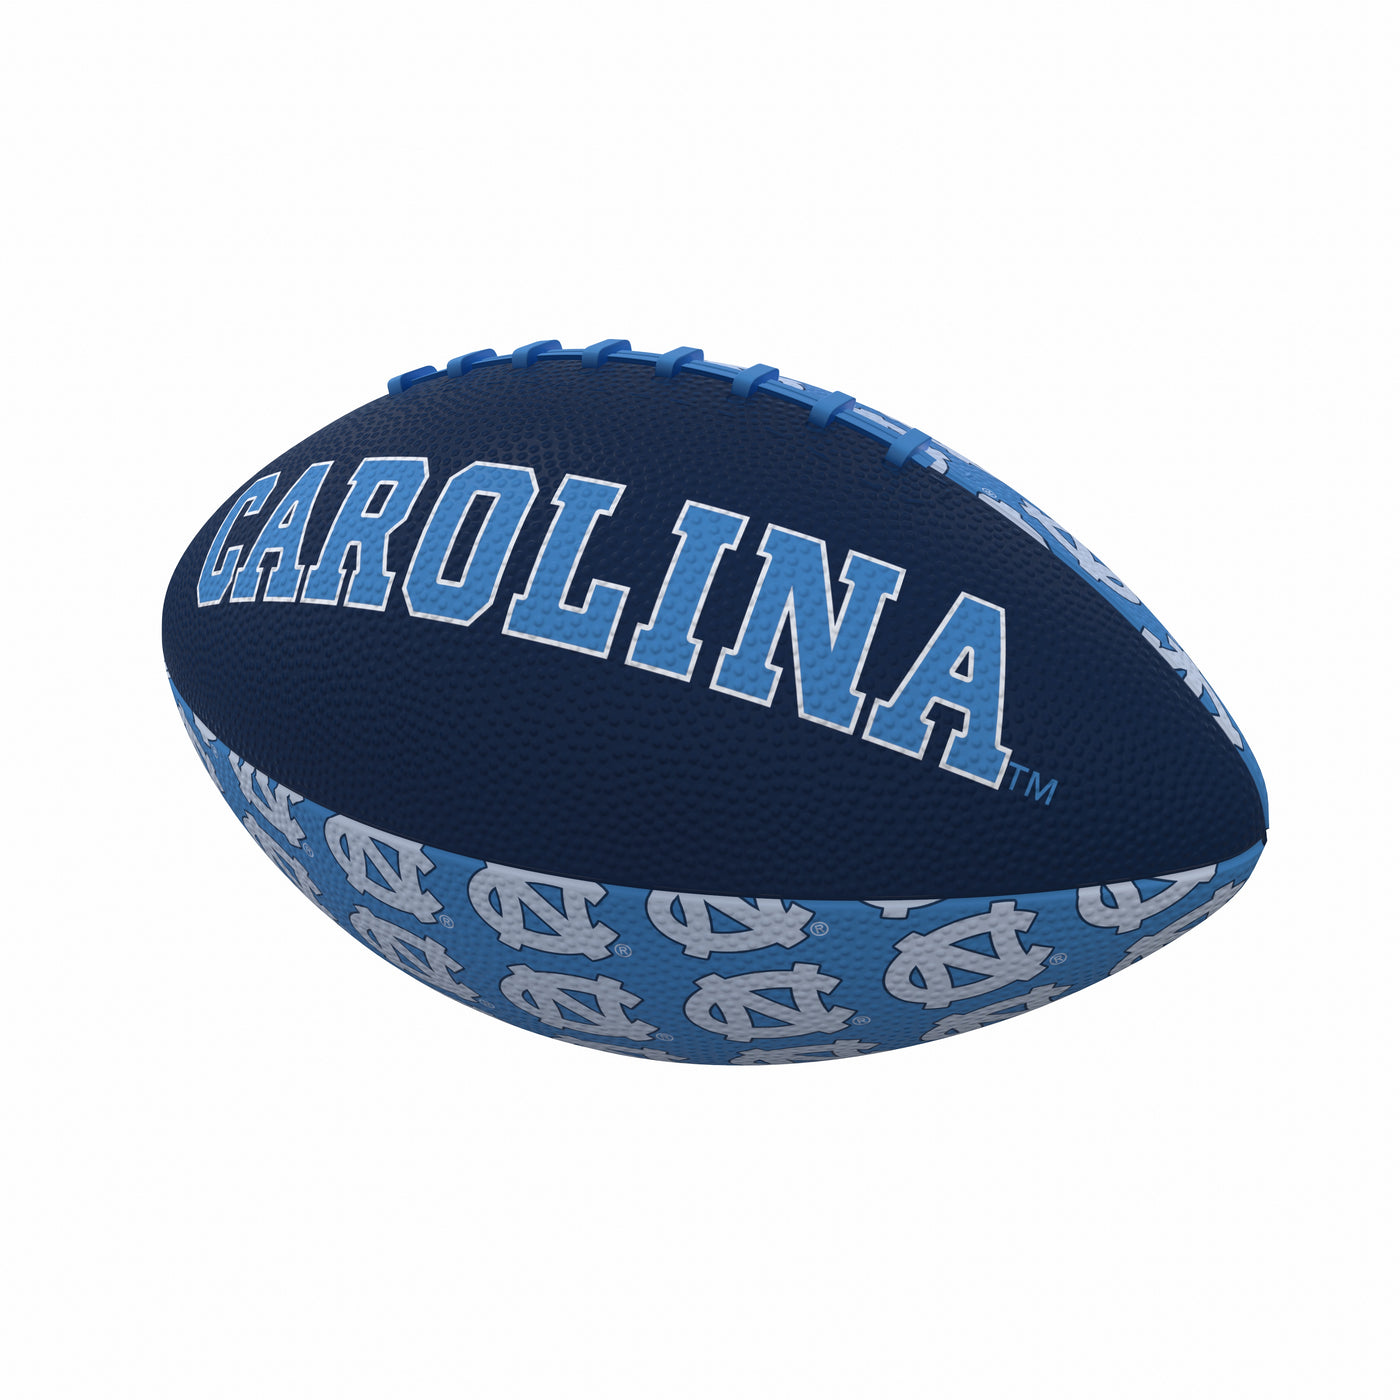 North Carolina Repeating Mini-Size Rubber Football